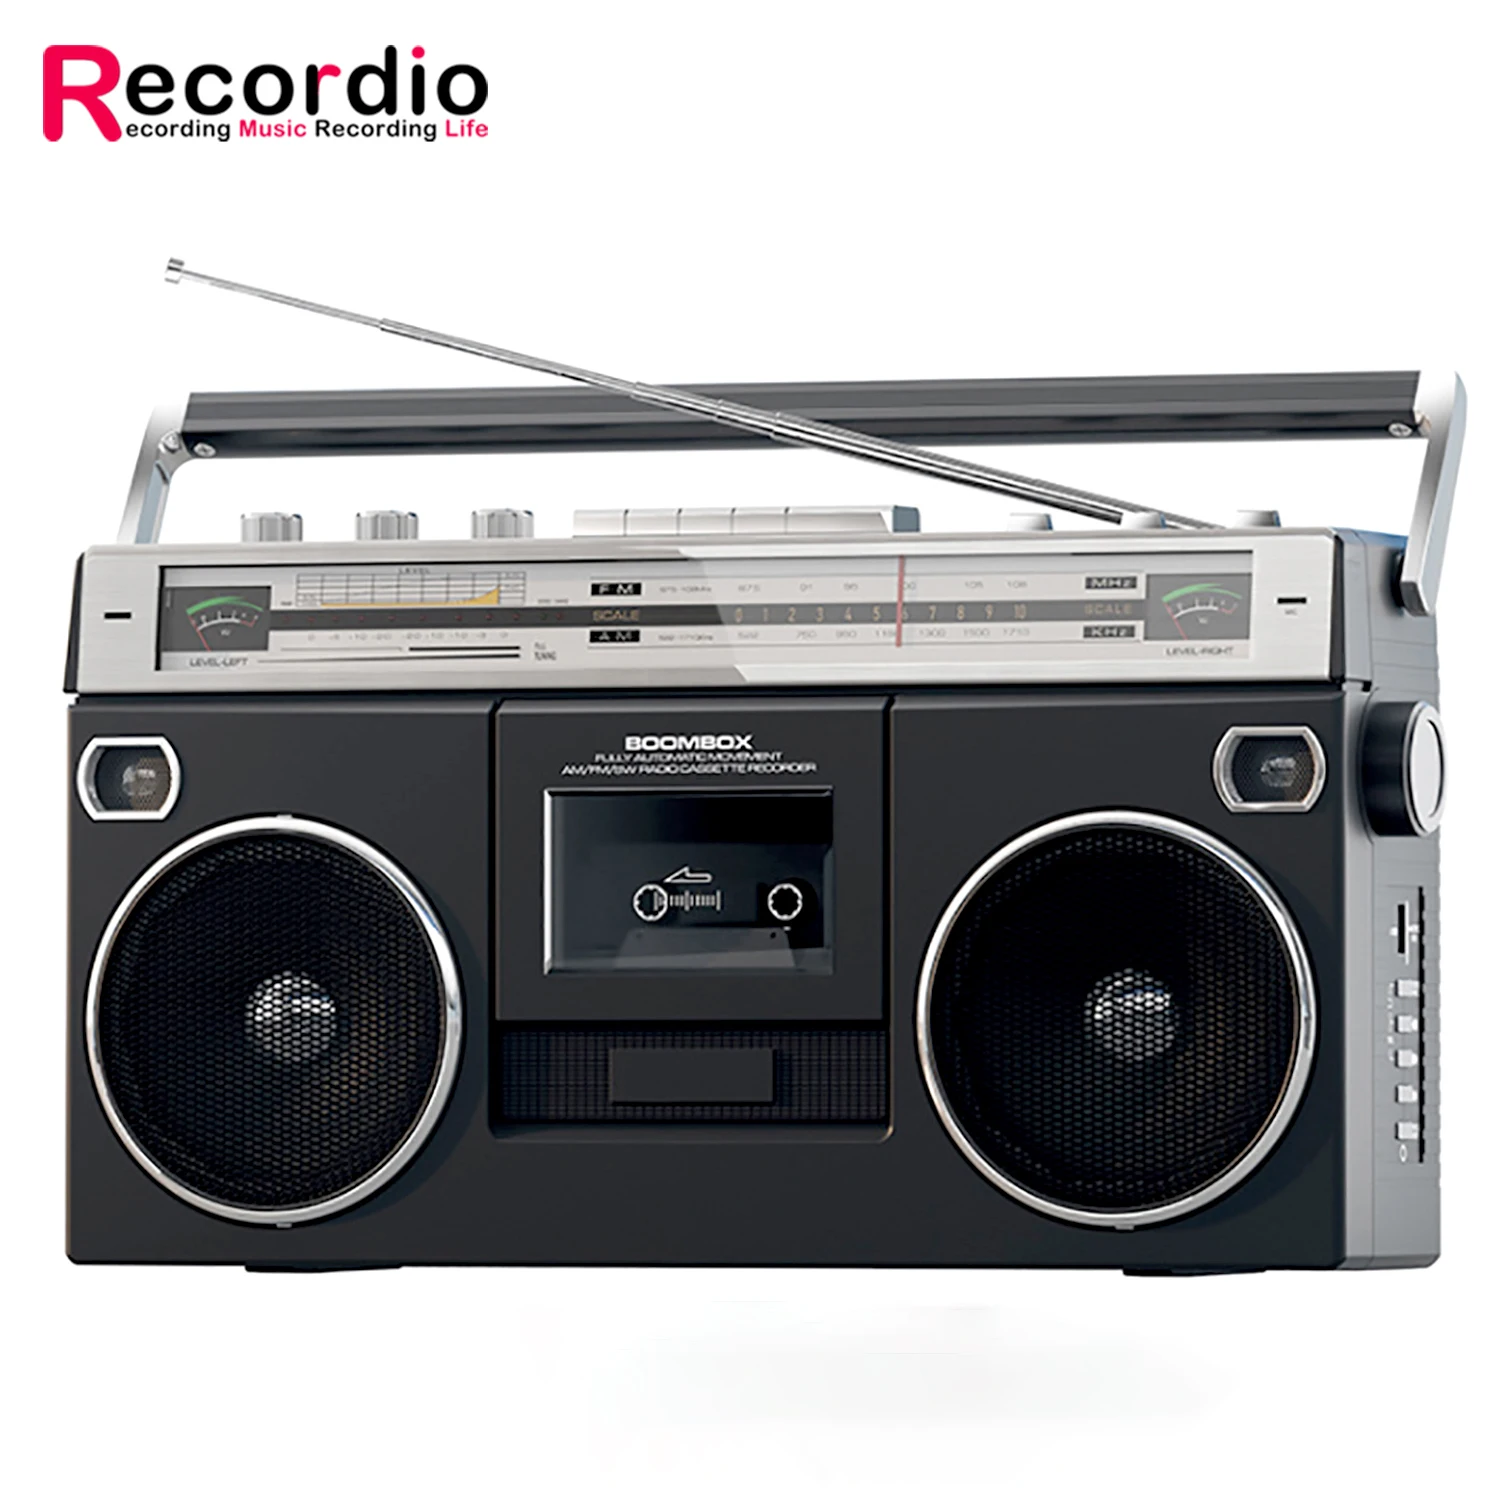 

GAS-RD80 Tape player tape recorder old-fashioned nostalgic 80s retro stereo cassette recorder radio